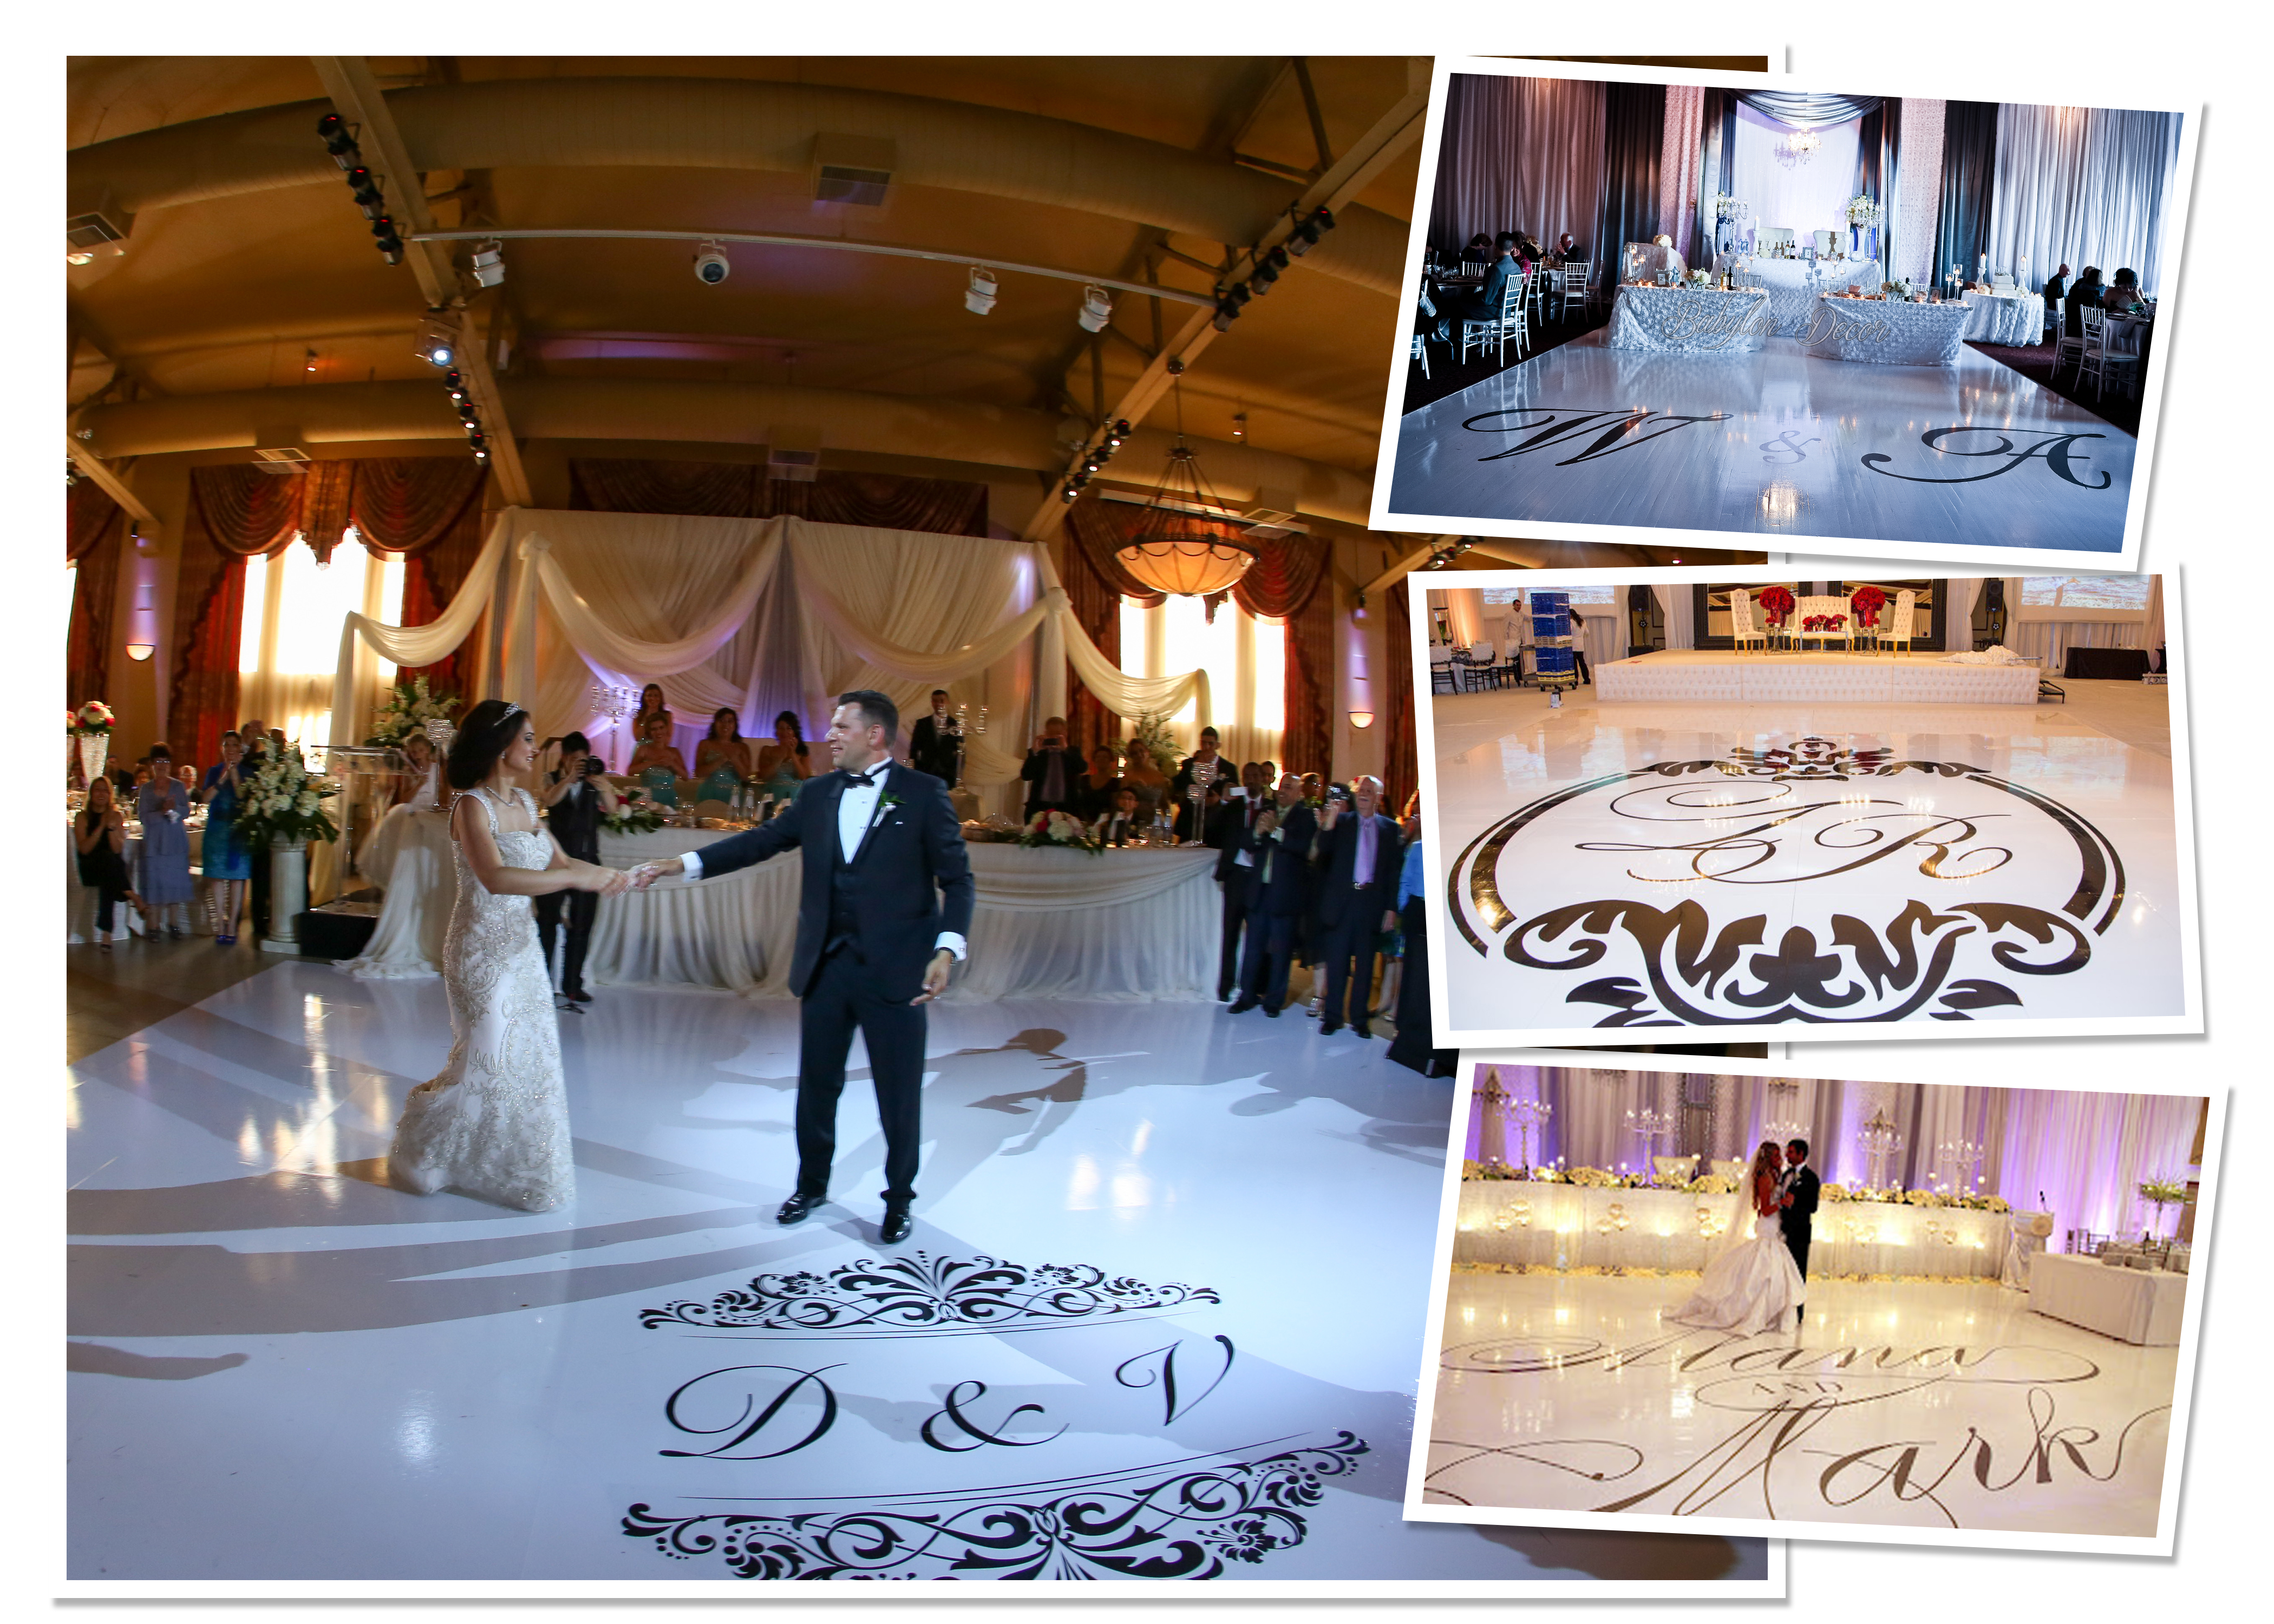 14b Choosing a Custom Dance Floor with Monogram for your Wedding